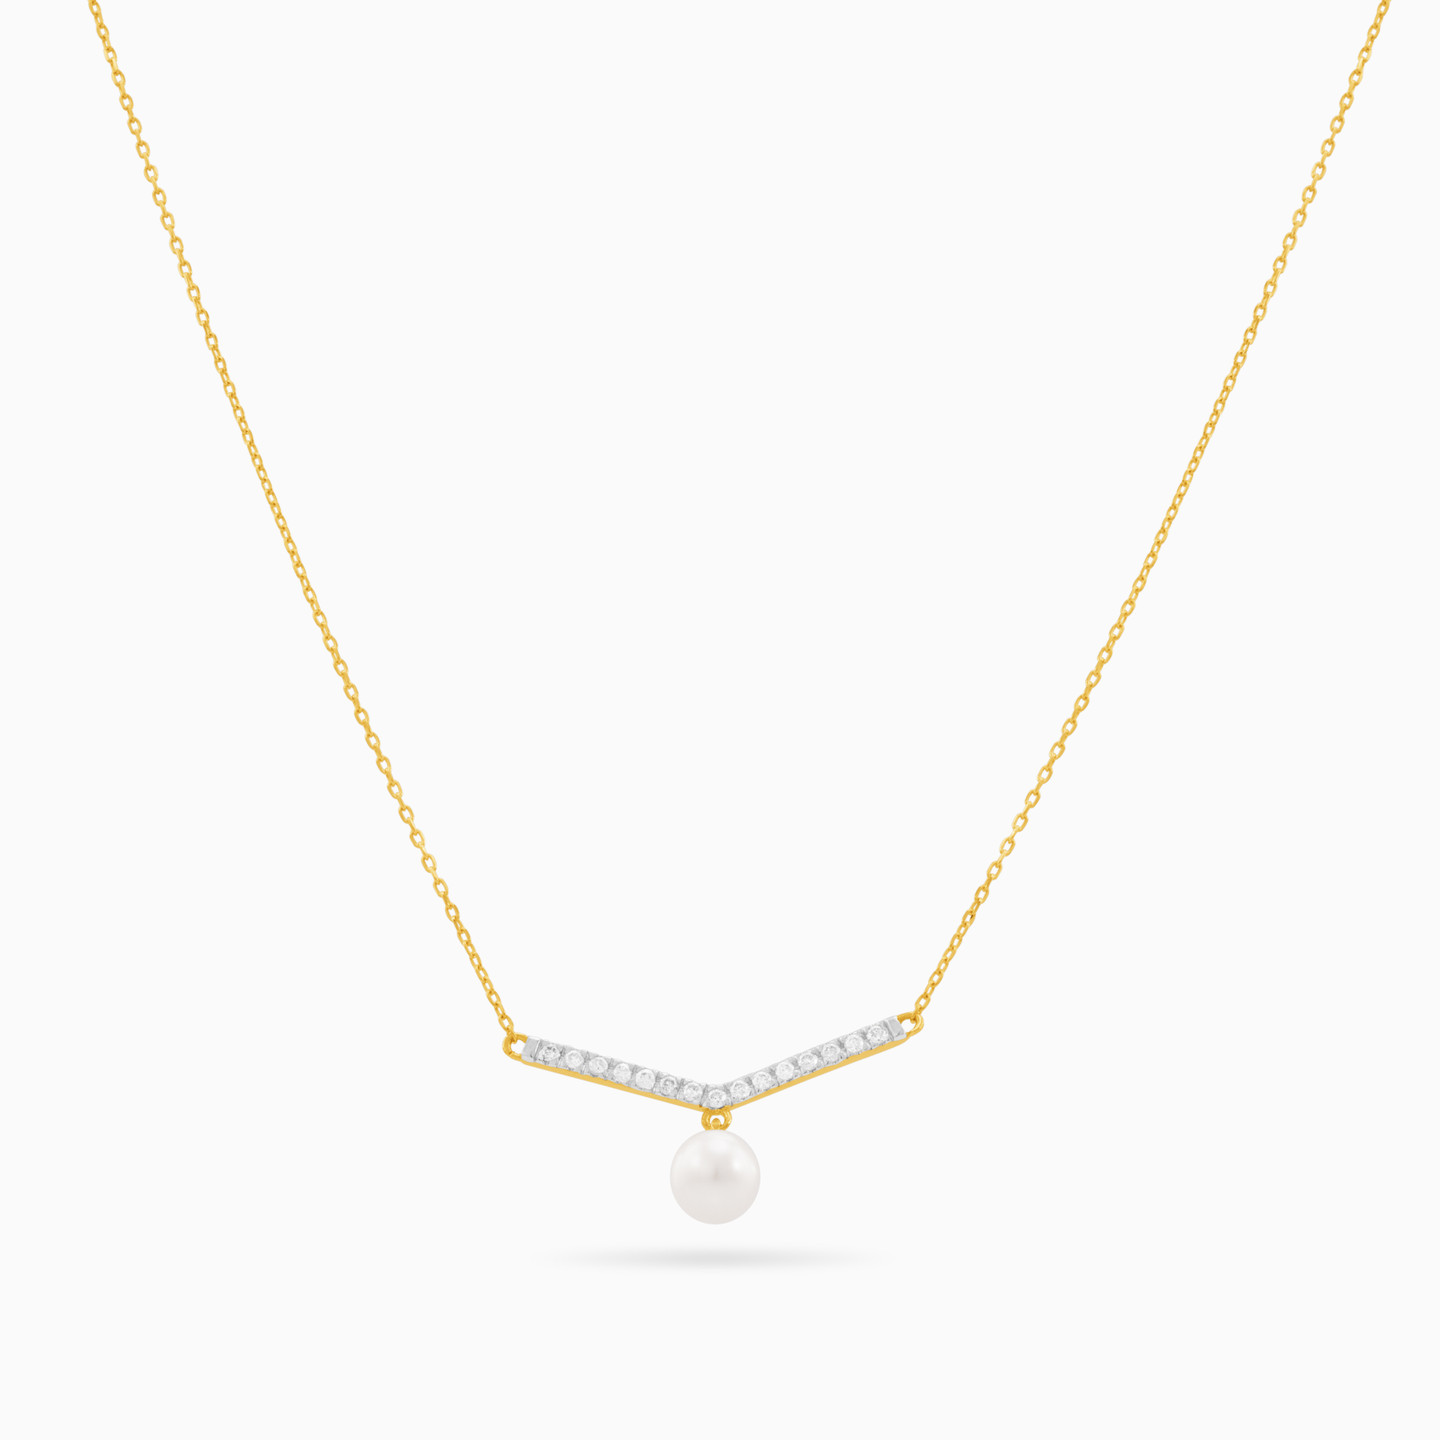 18K Gold Diamond & Pearl Pendant Necklace - 3